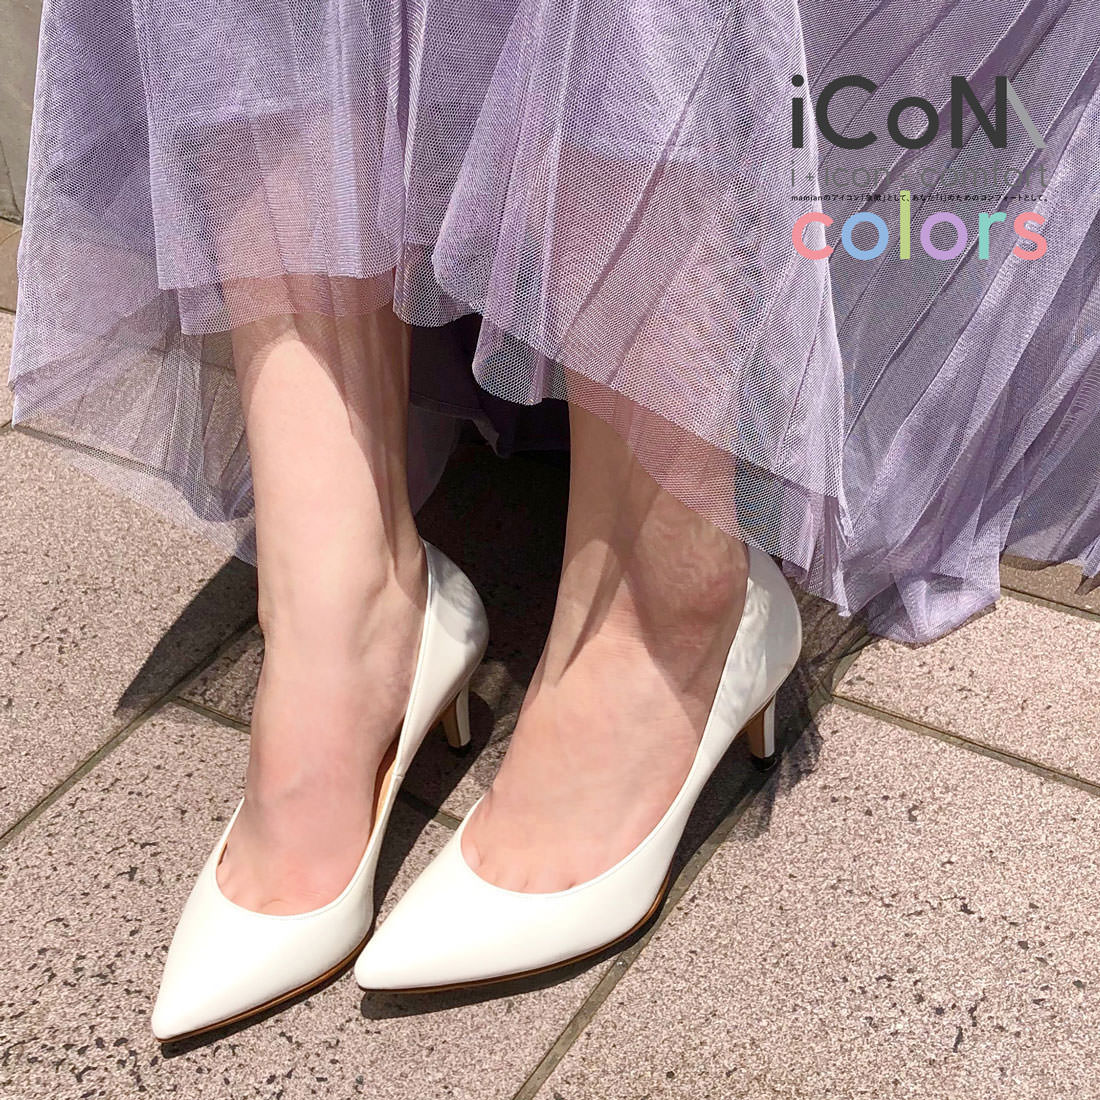 【iCoN】Colors 70P:メレンゲ